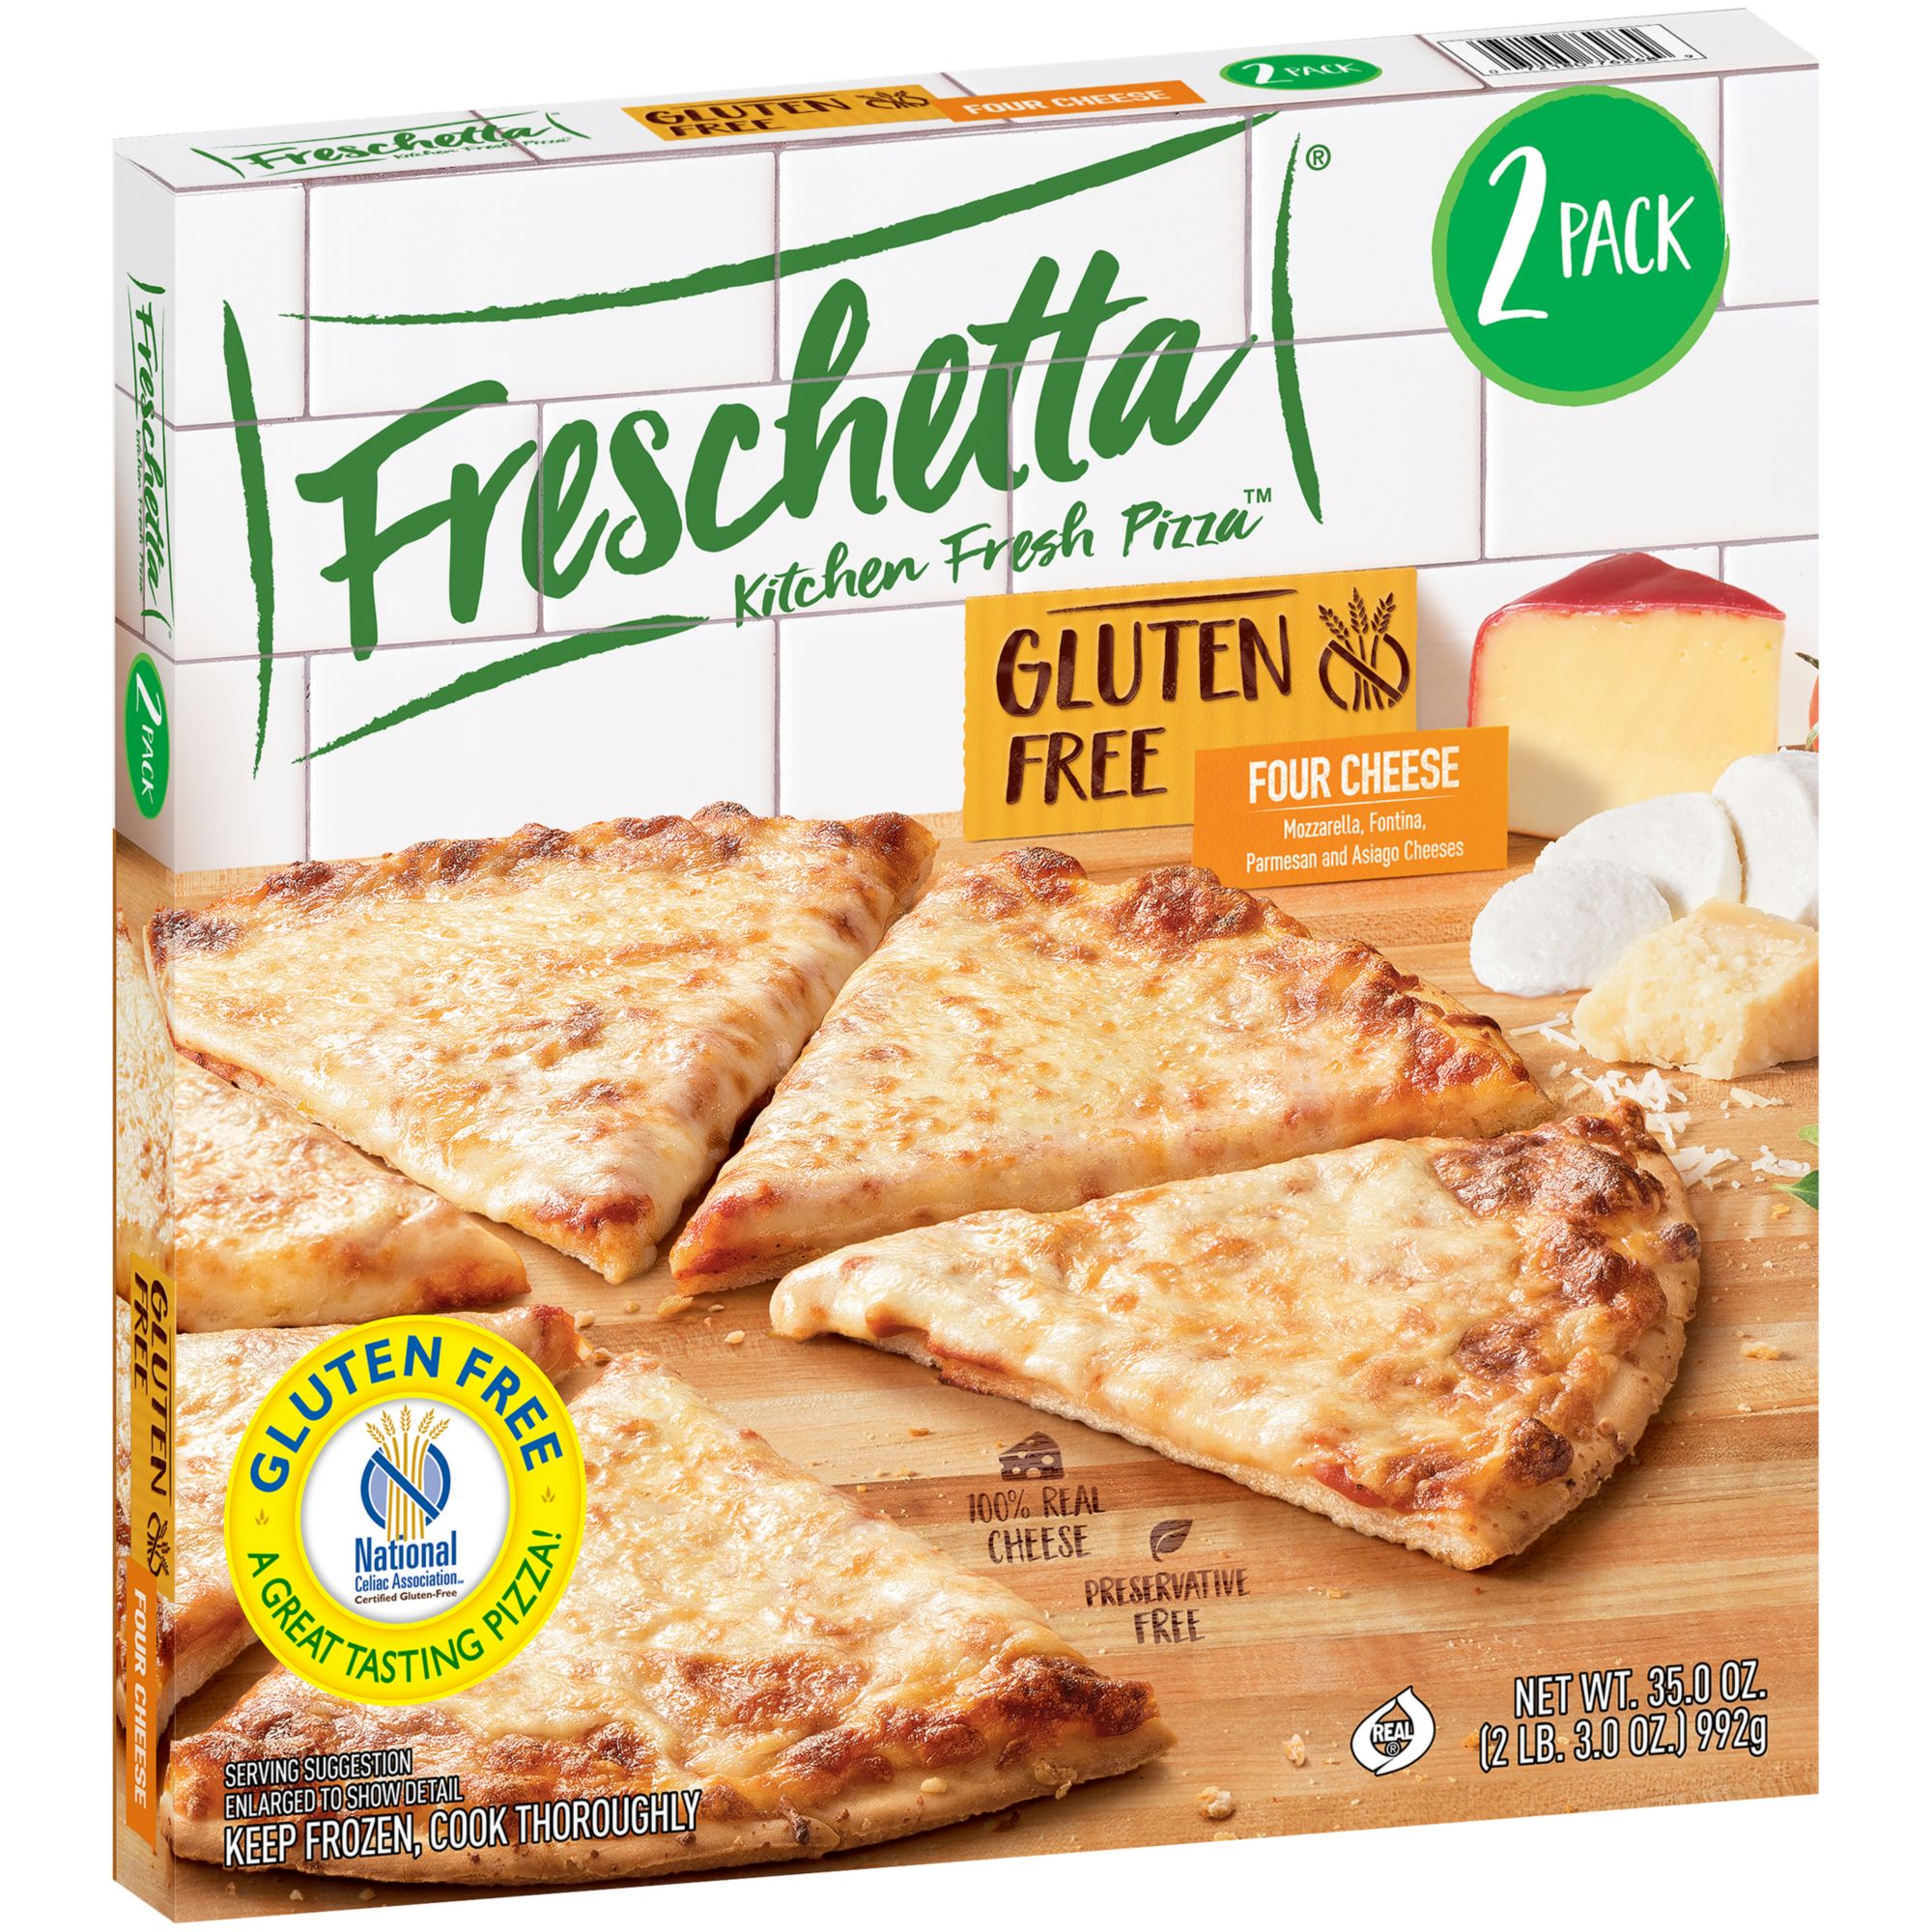 Frechetta Four Cheese Gluten Free Pizza, 2 ct.